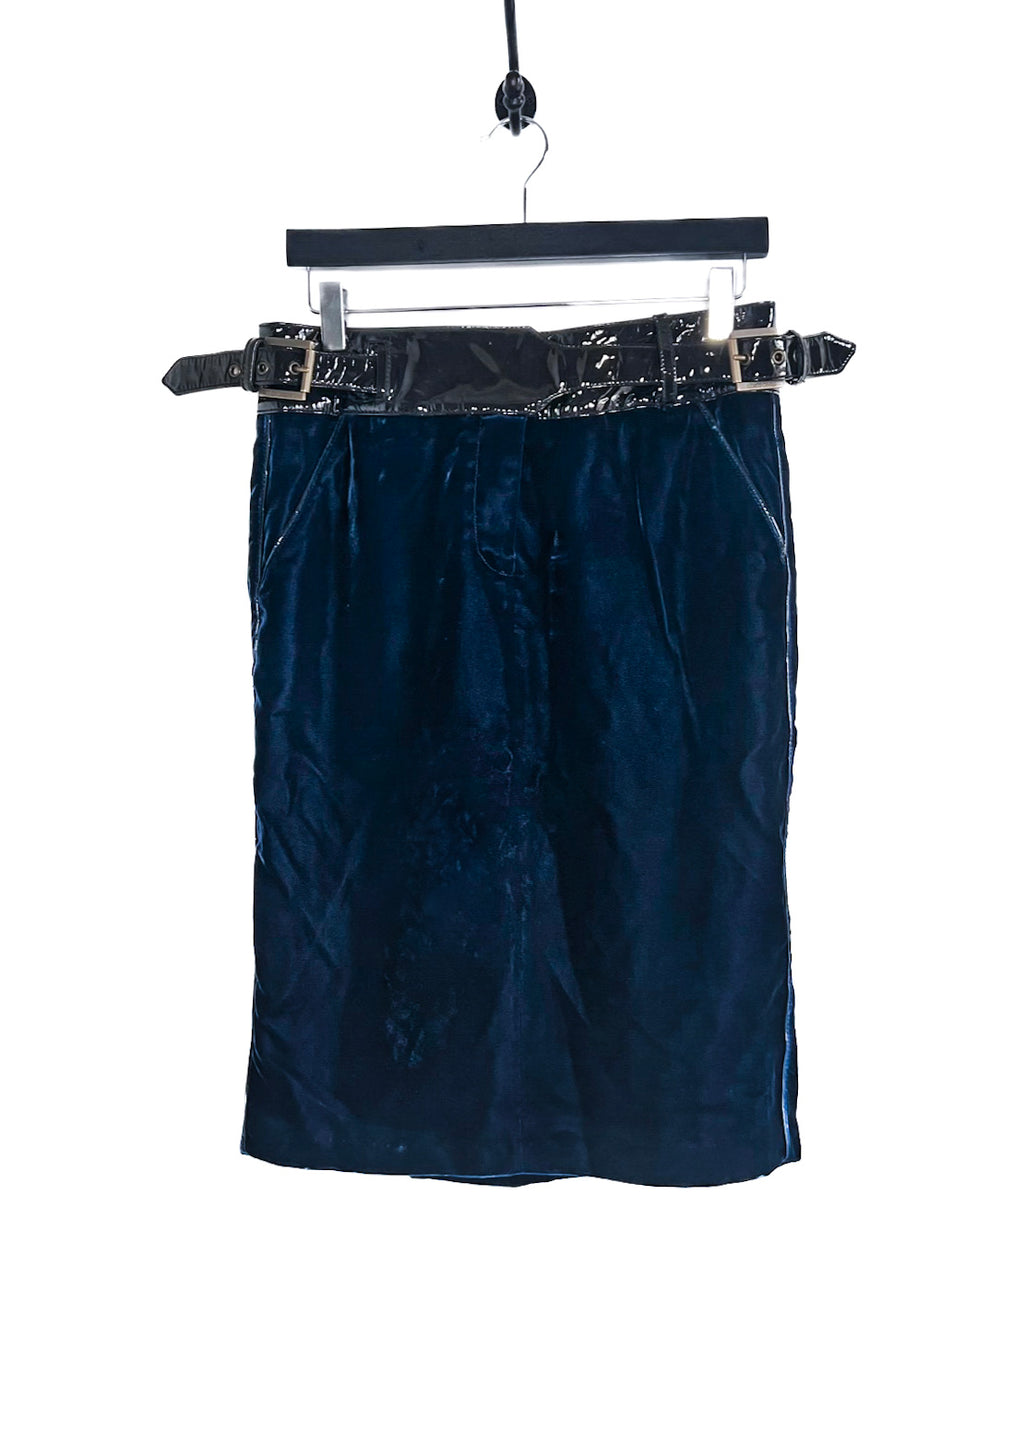 Roberto Cavalli Blue Velvet Patent Leather Accent Skirt